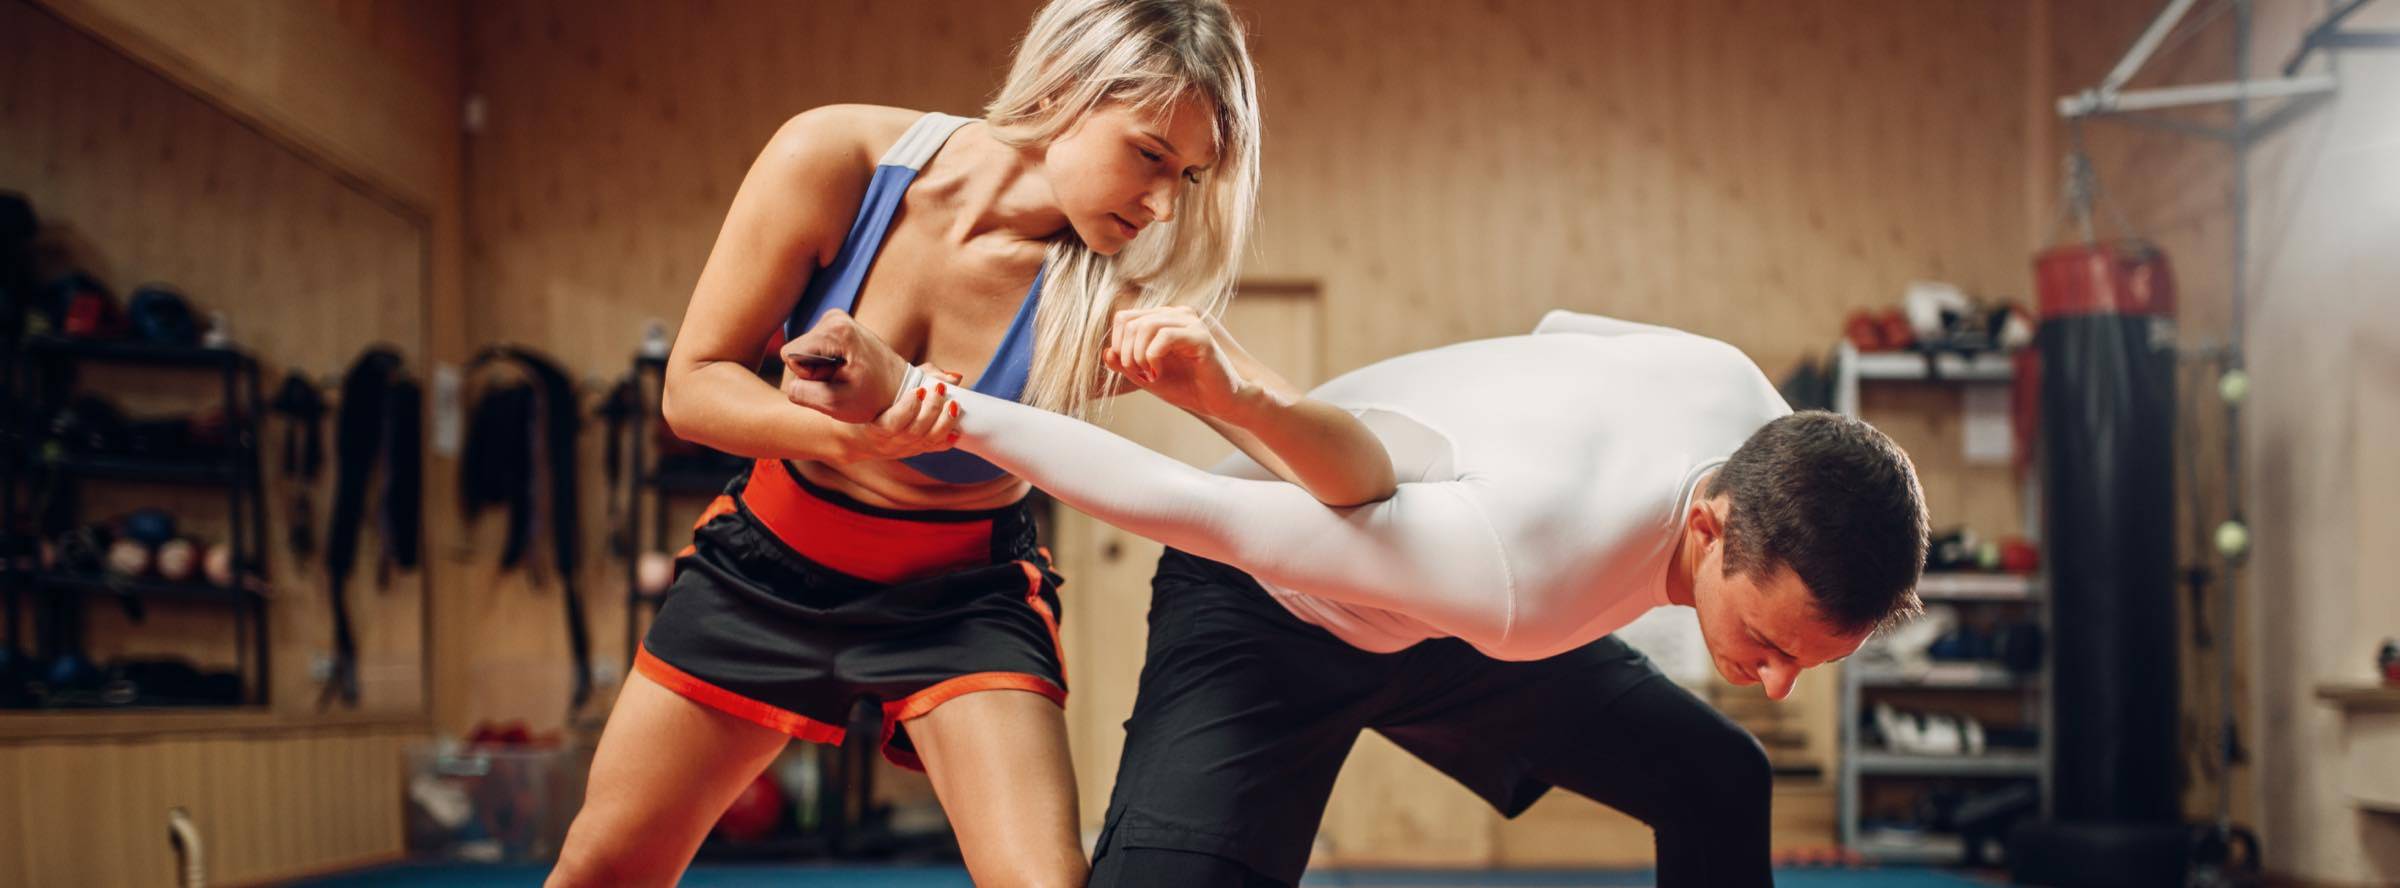 Woman Practicing Self Defense Training